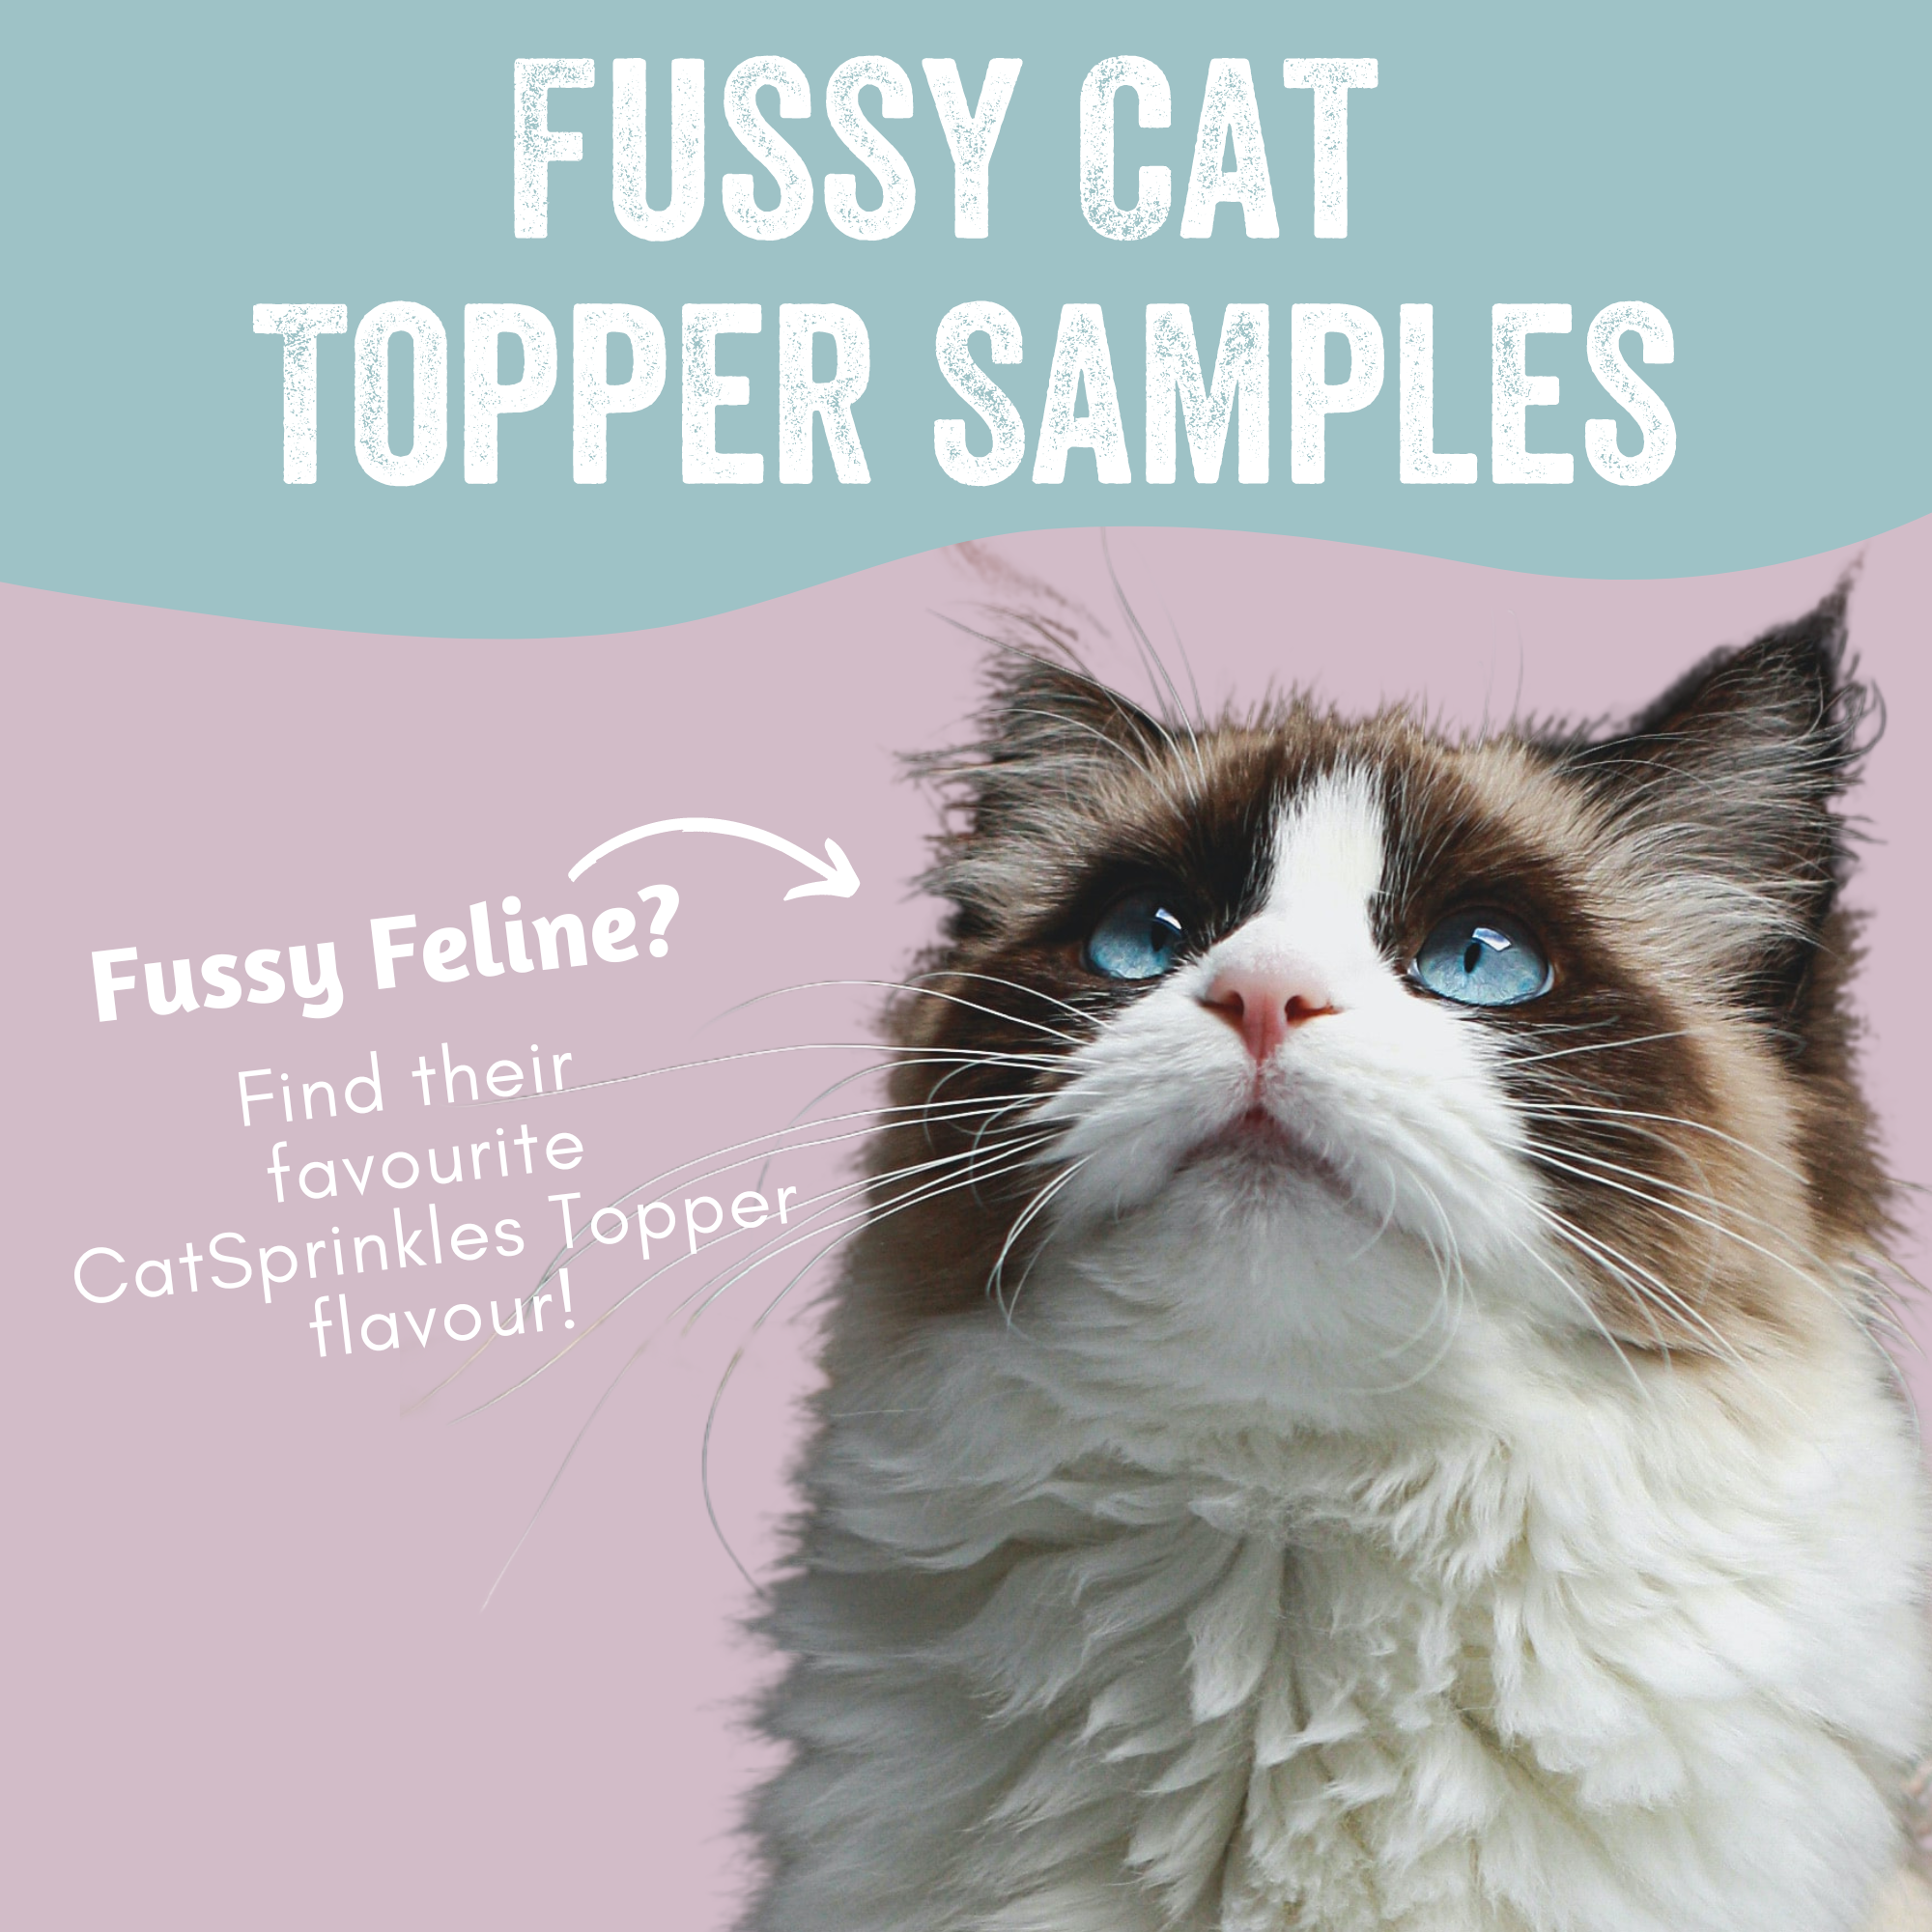 Cat Sprinkles Topper Samples